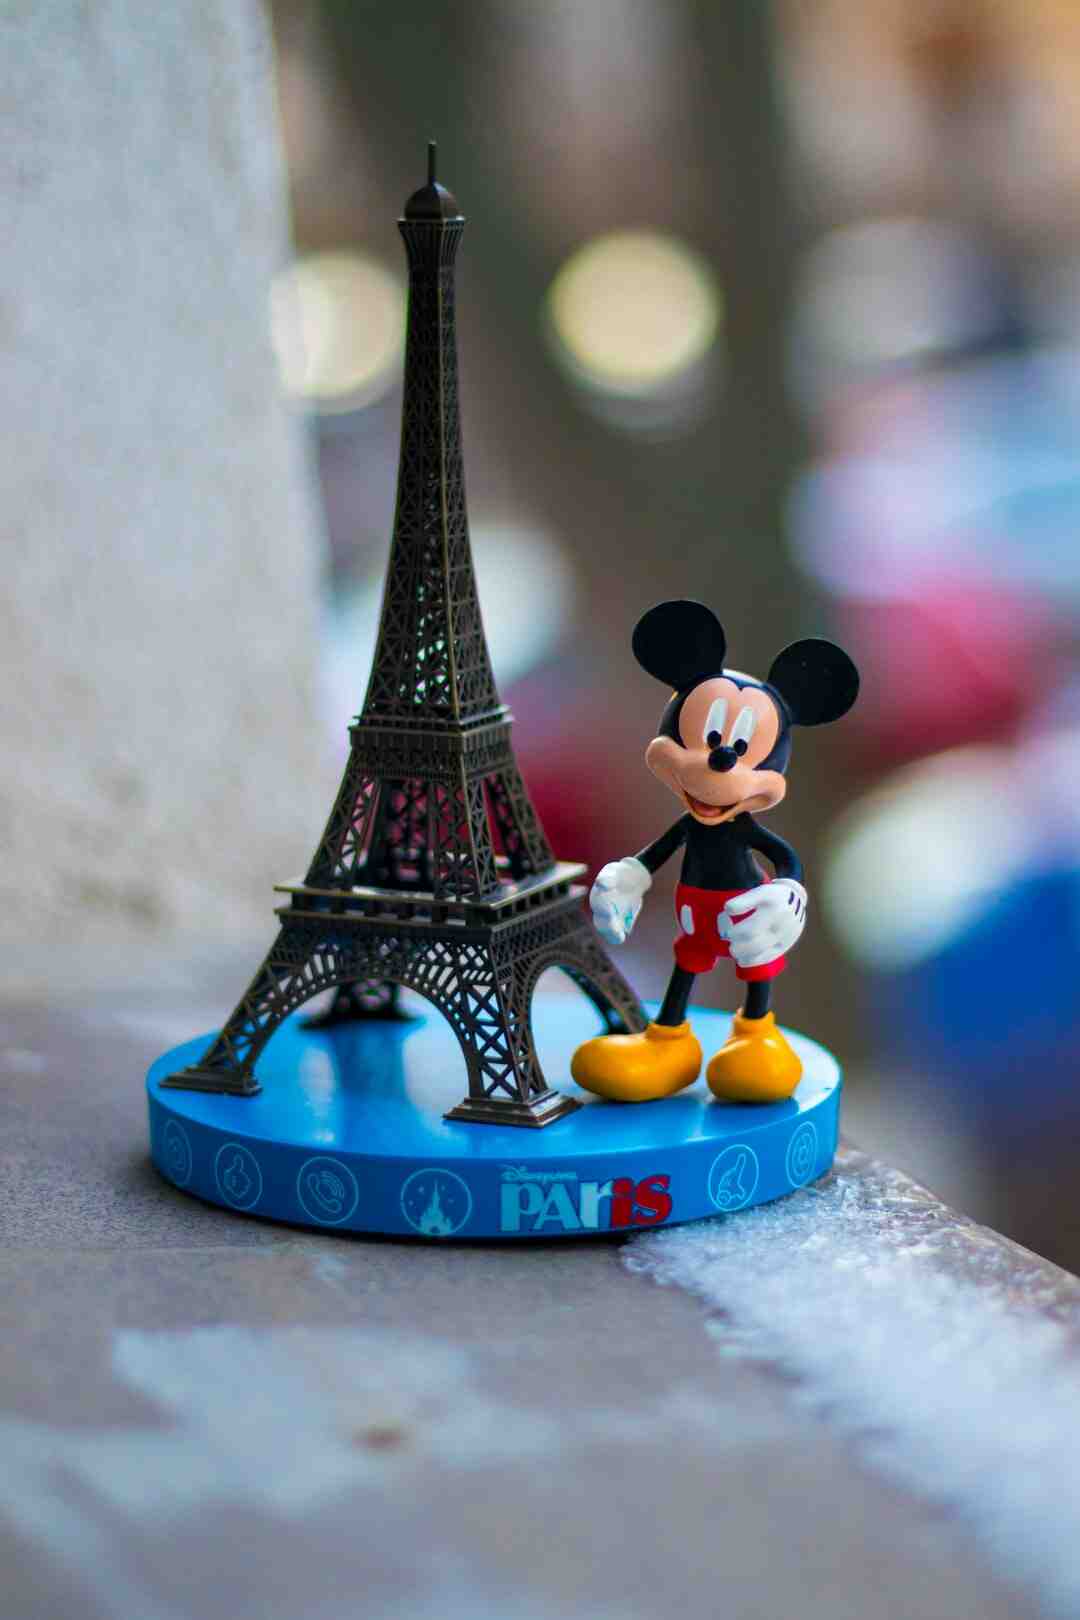 Disneyland Paris'e hangi istasyondan gidilir?